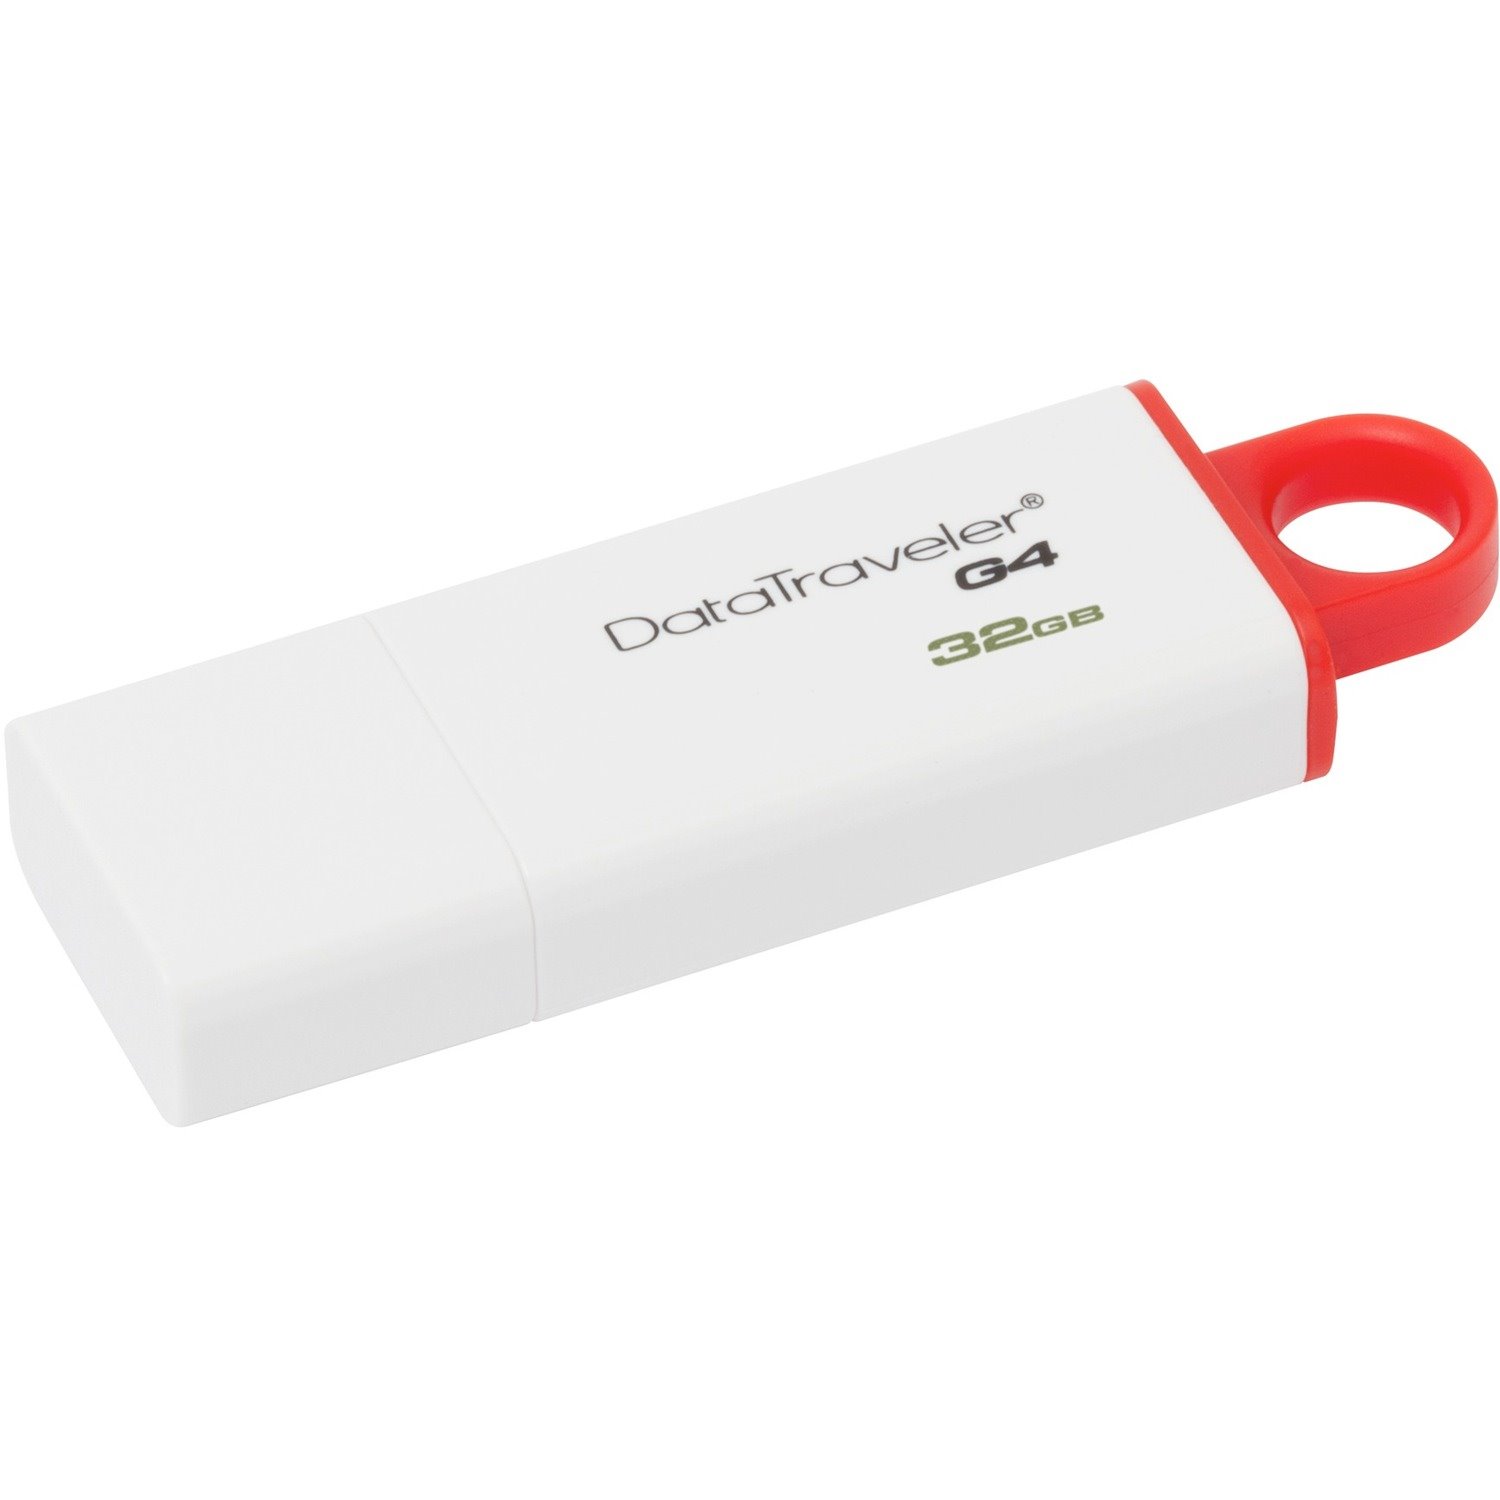 Kingston DataTraveler G4 32 GB USB 3.0 Flash Drive - Red, White